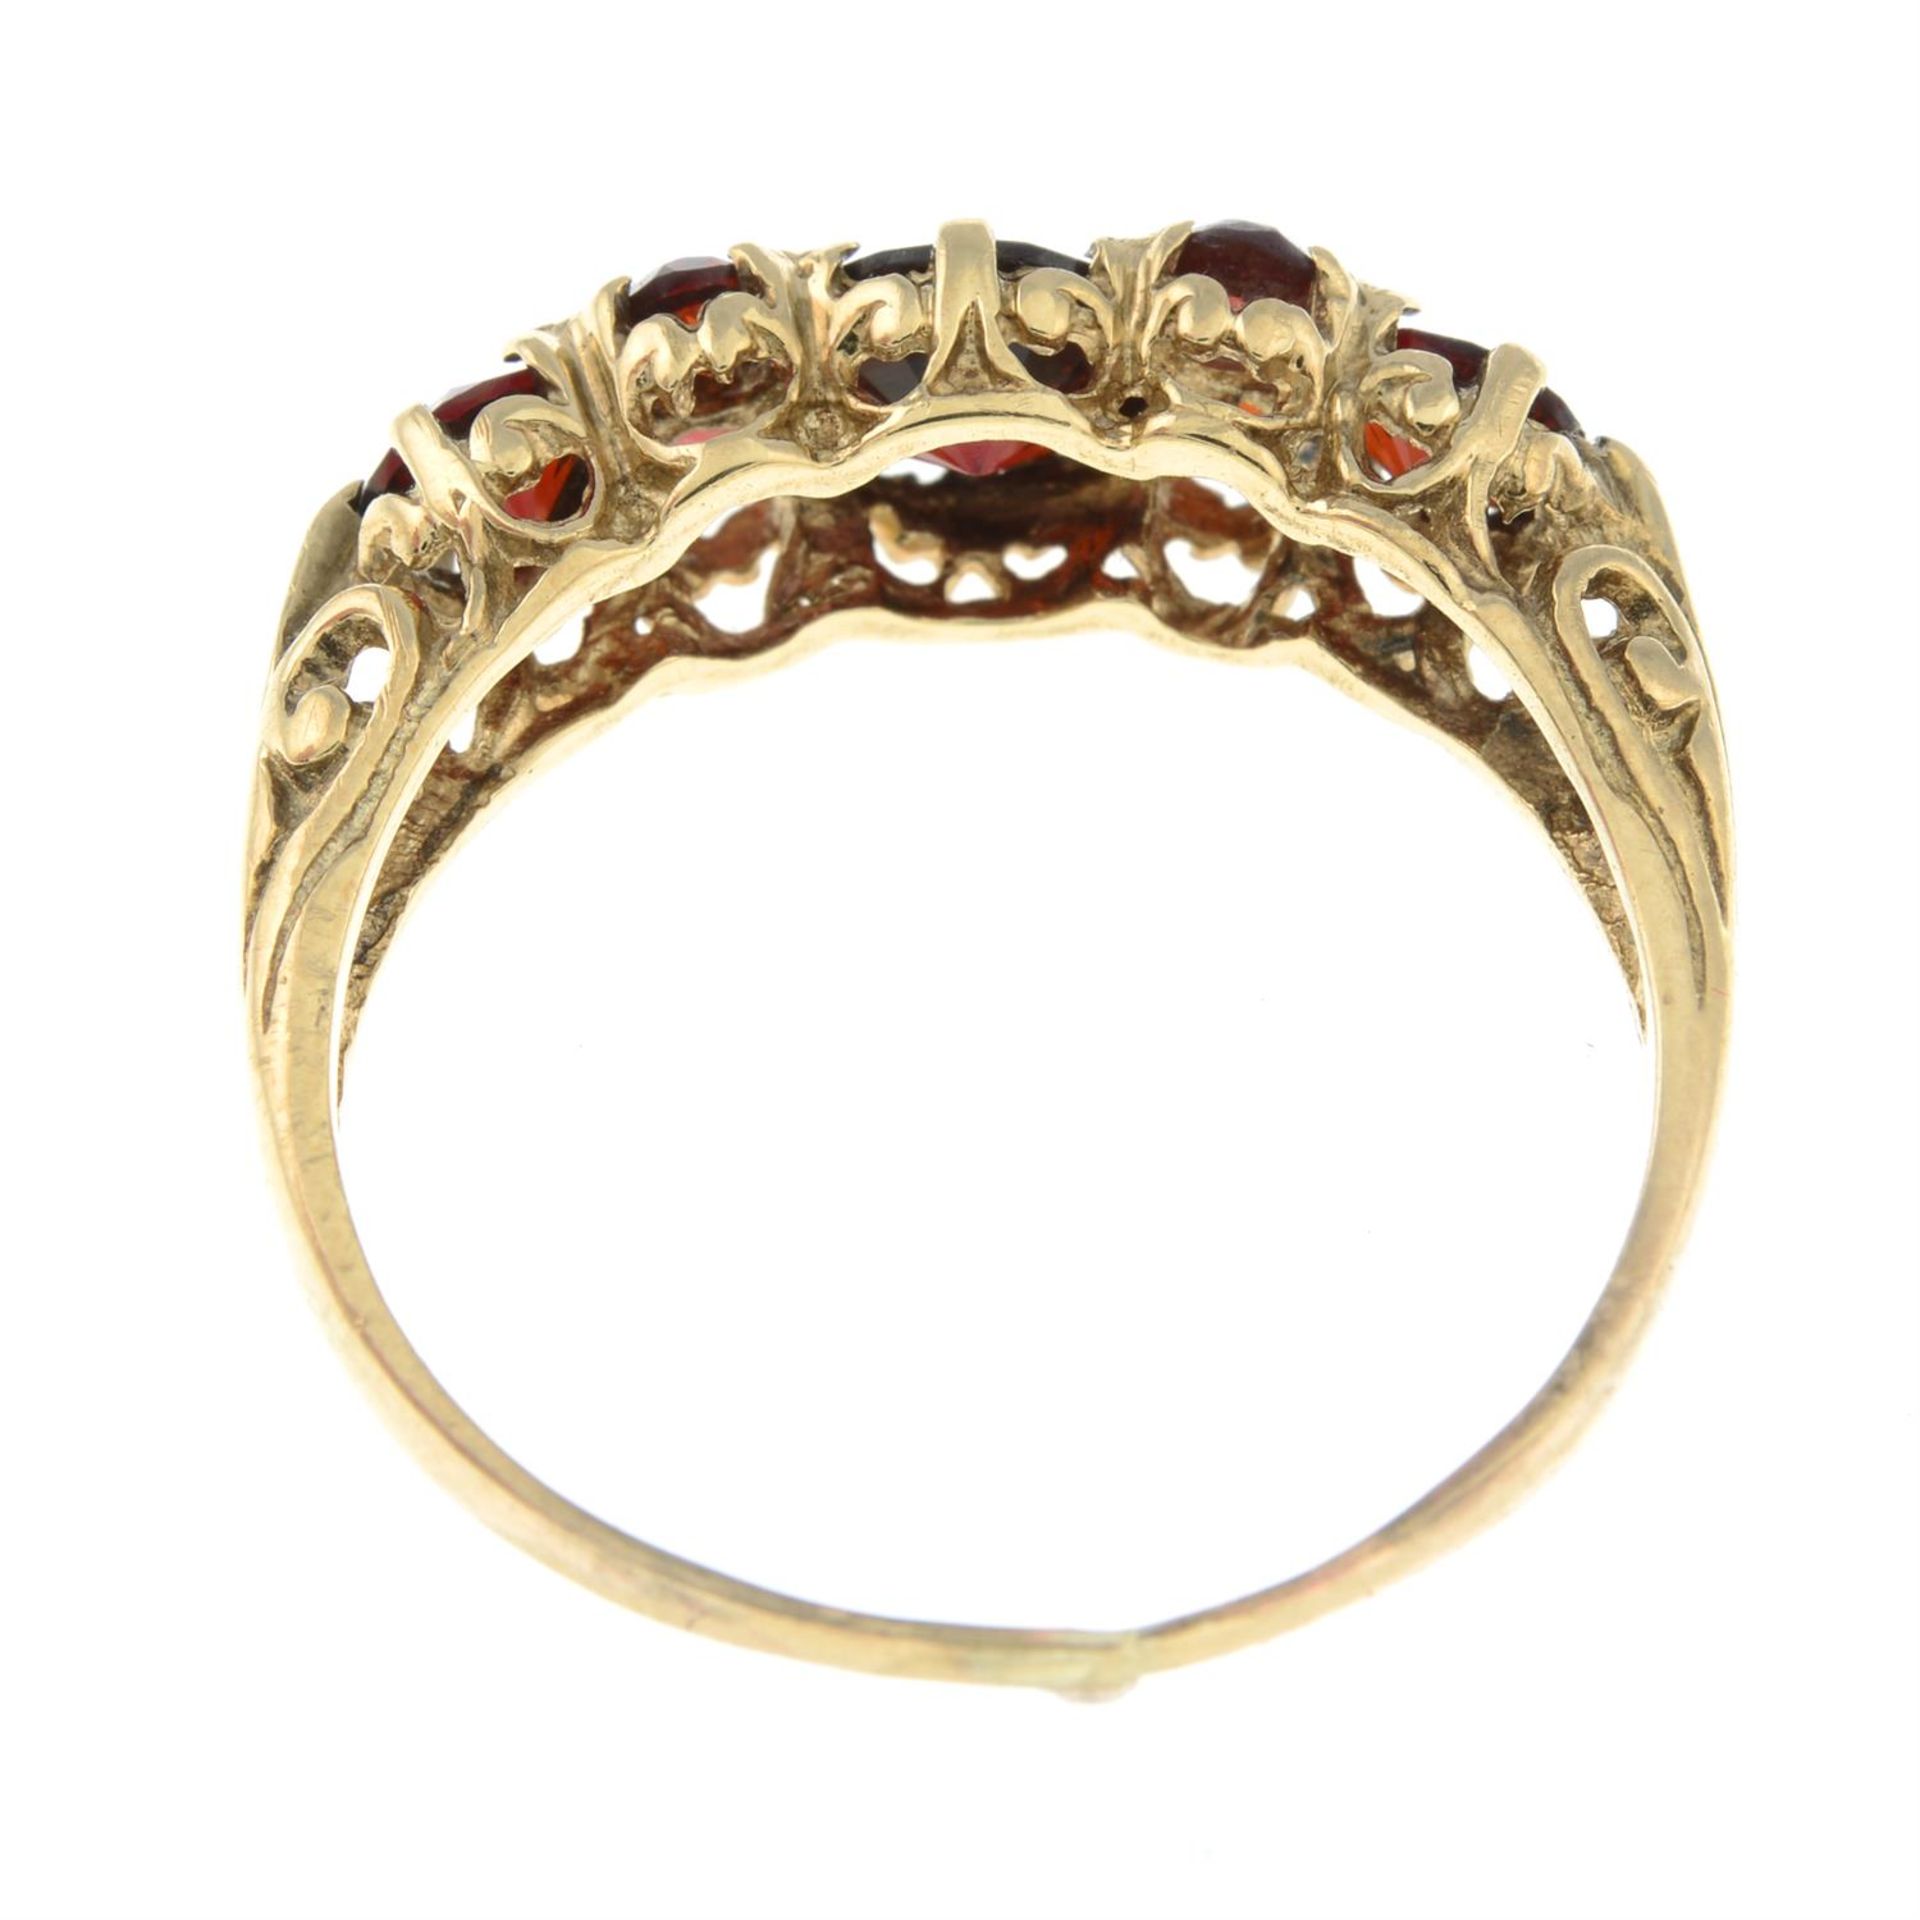 A garnet dress ring. - Image 2 of 2